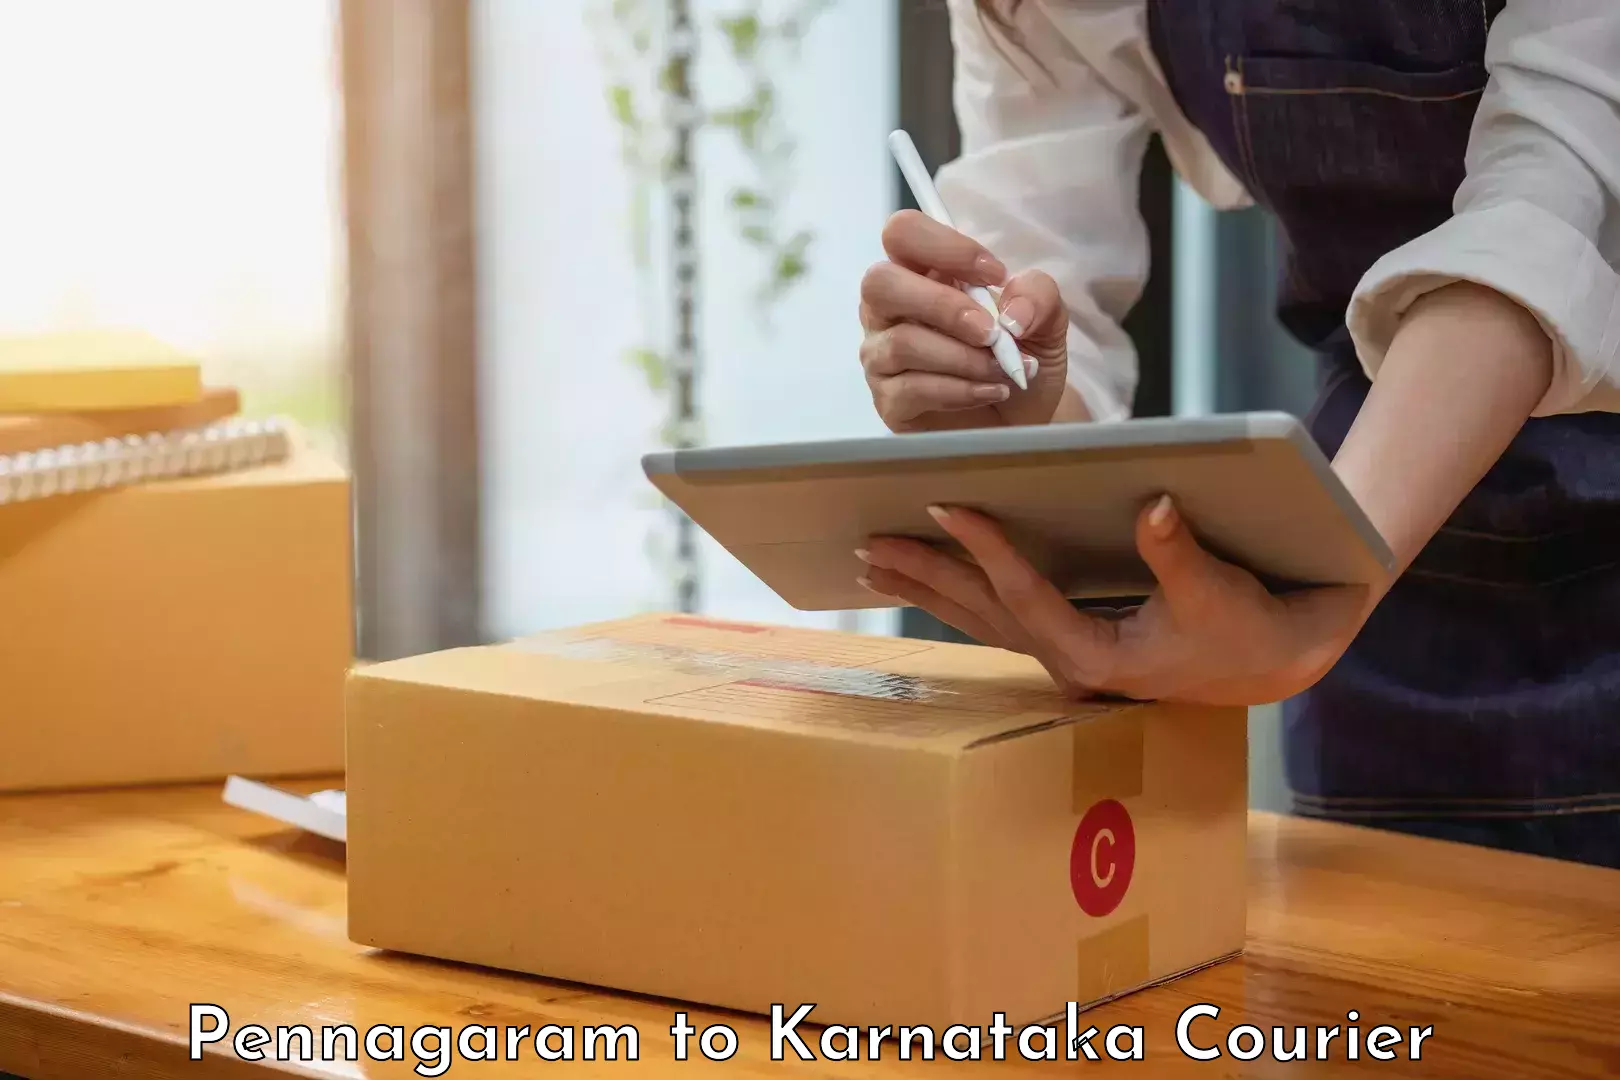 24-hour courier service Pennagaram to Karnataka